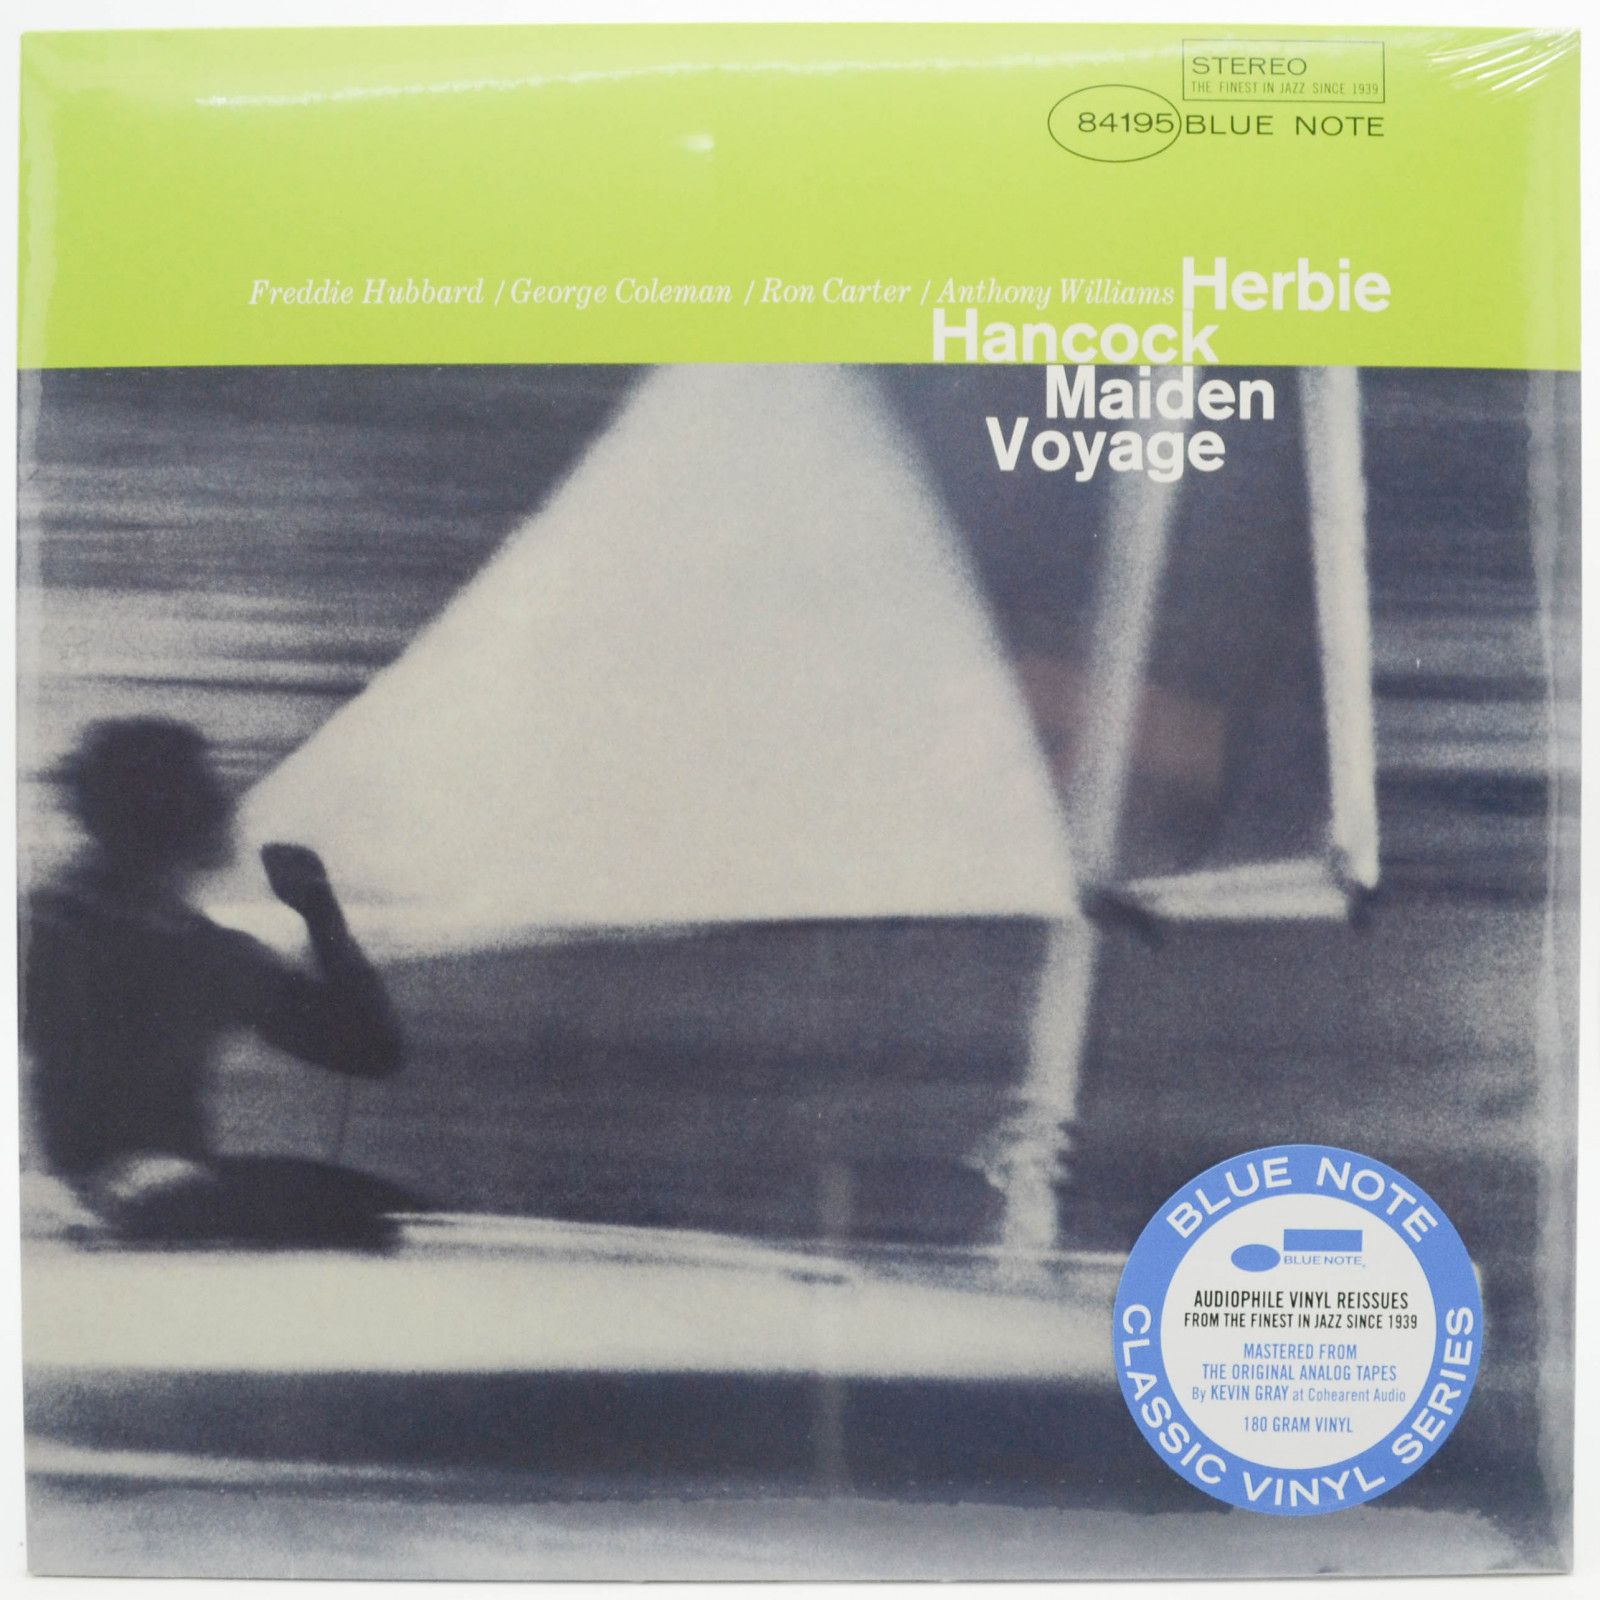 Herbie Hancock — Maiden Voyage, 1965